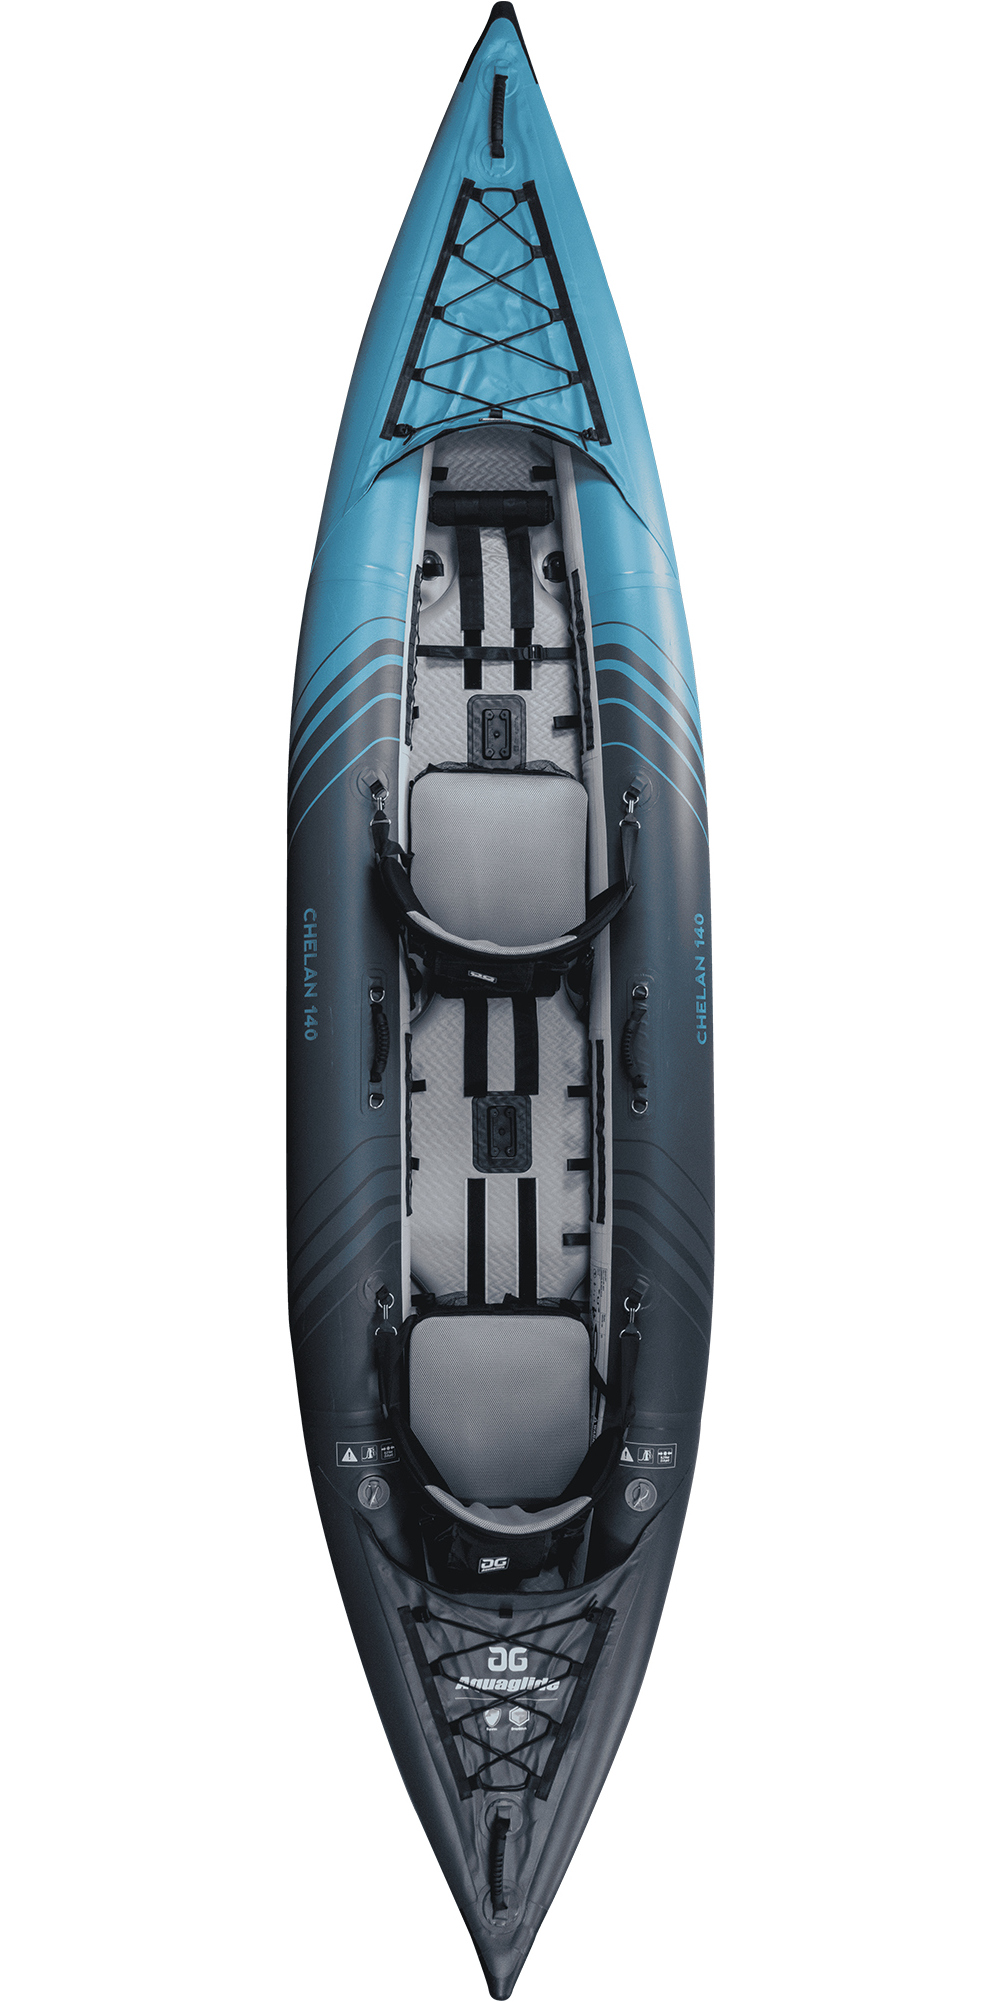 Cuscino per kayak leggero Cuscino per canoa in canoa Cuscino imbottito 